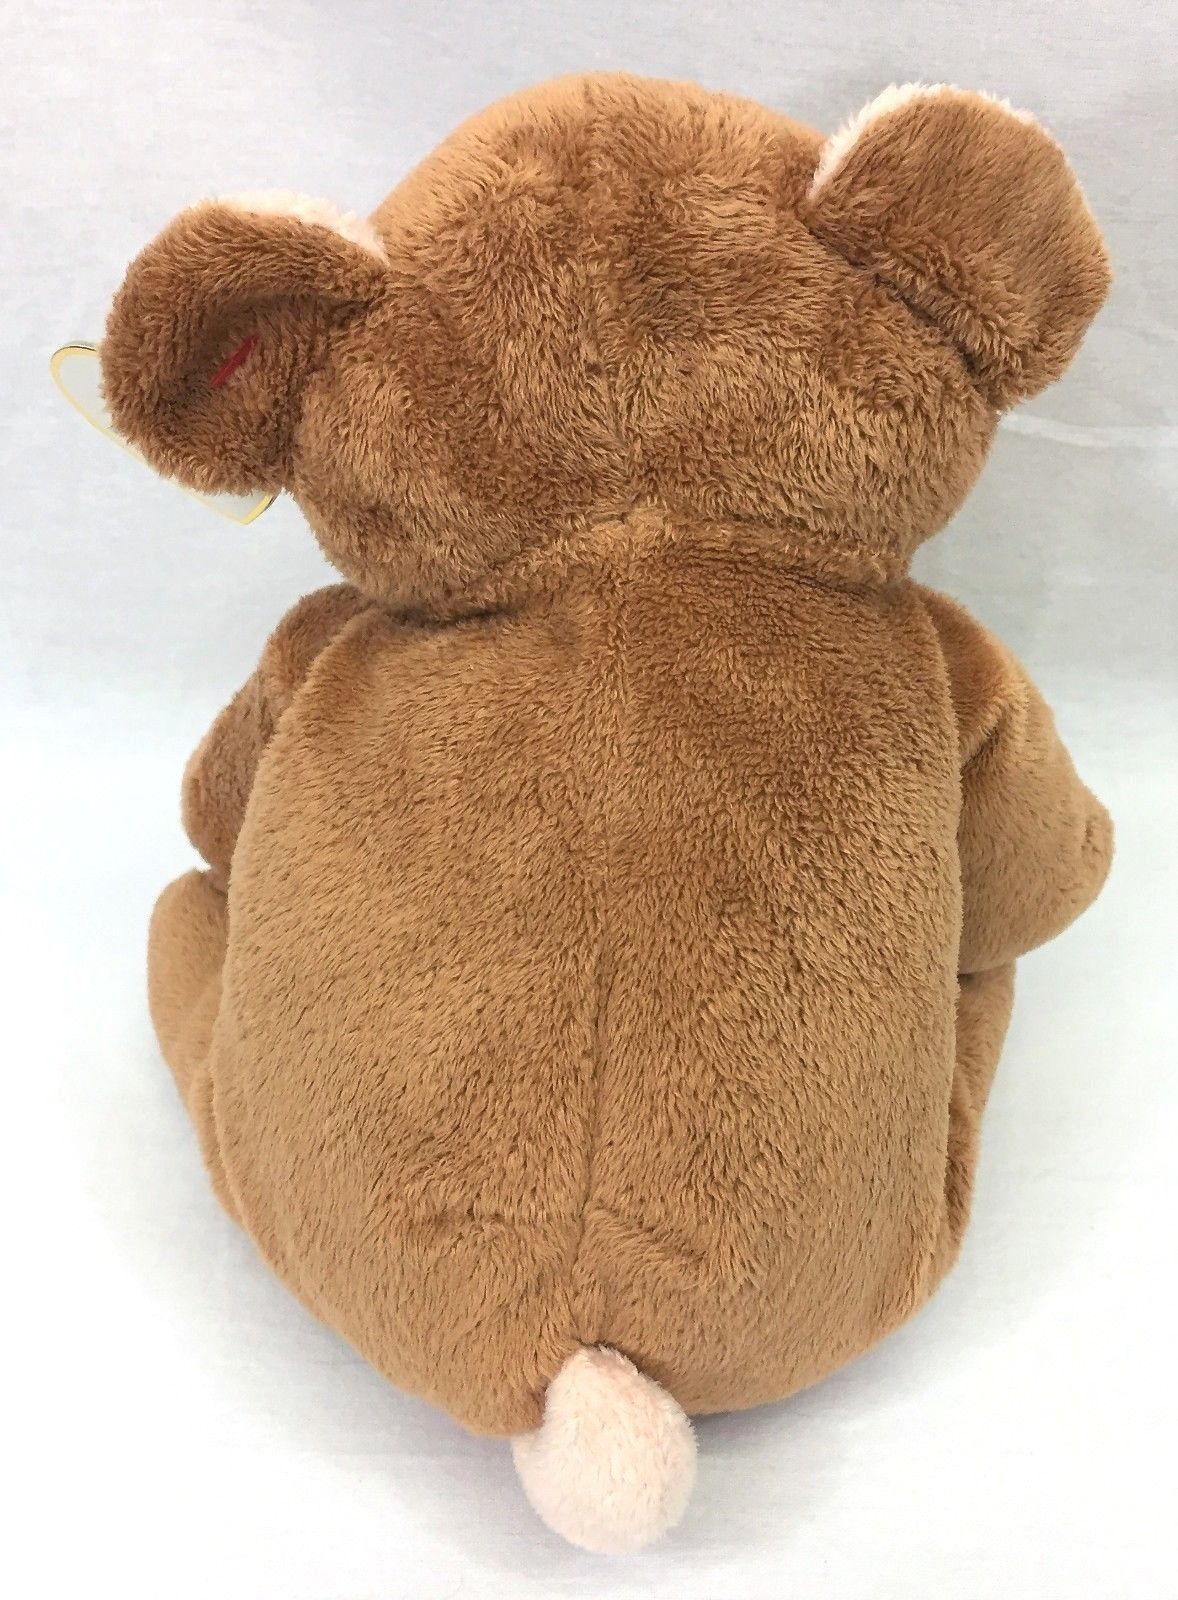 NWT HTF Ty Pluffies Slumbers Bear Plush Sewn Eyes Very Soft Stuffed Animal Toy